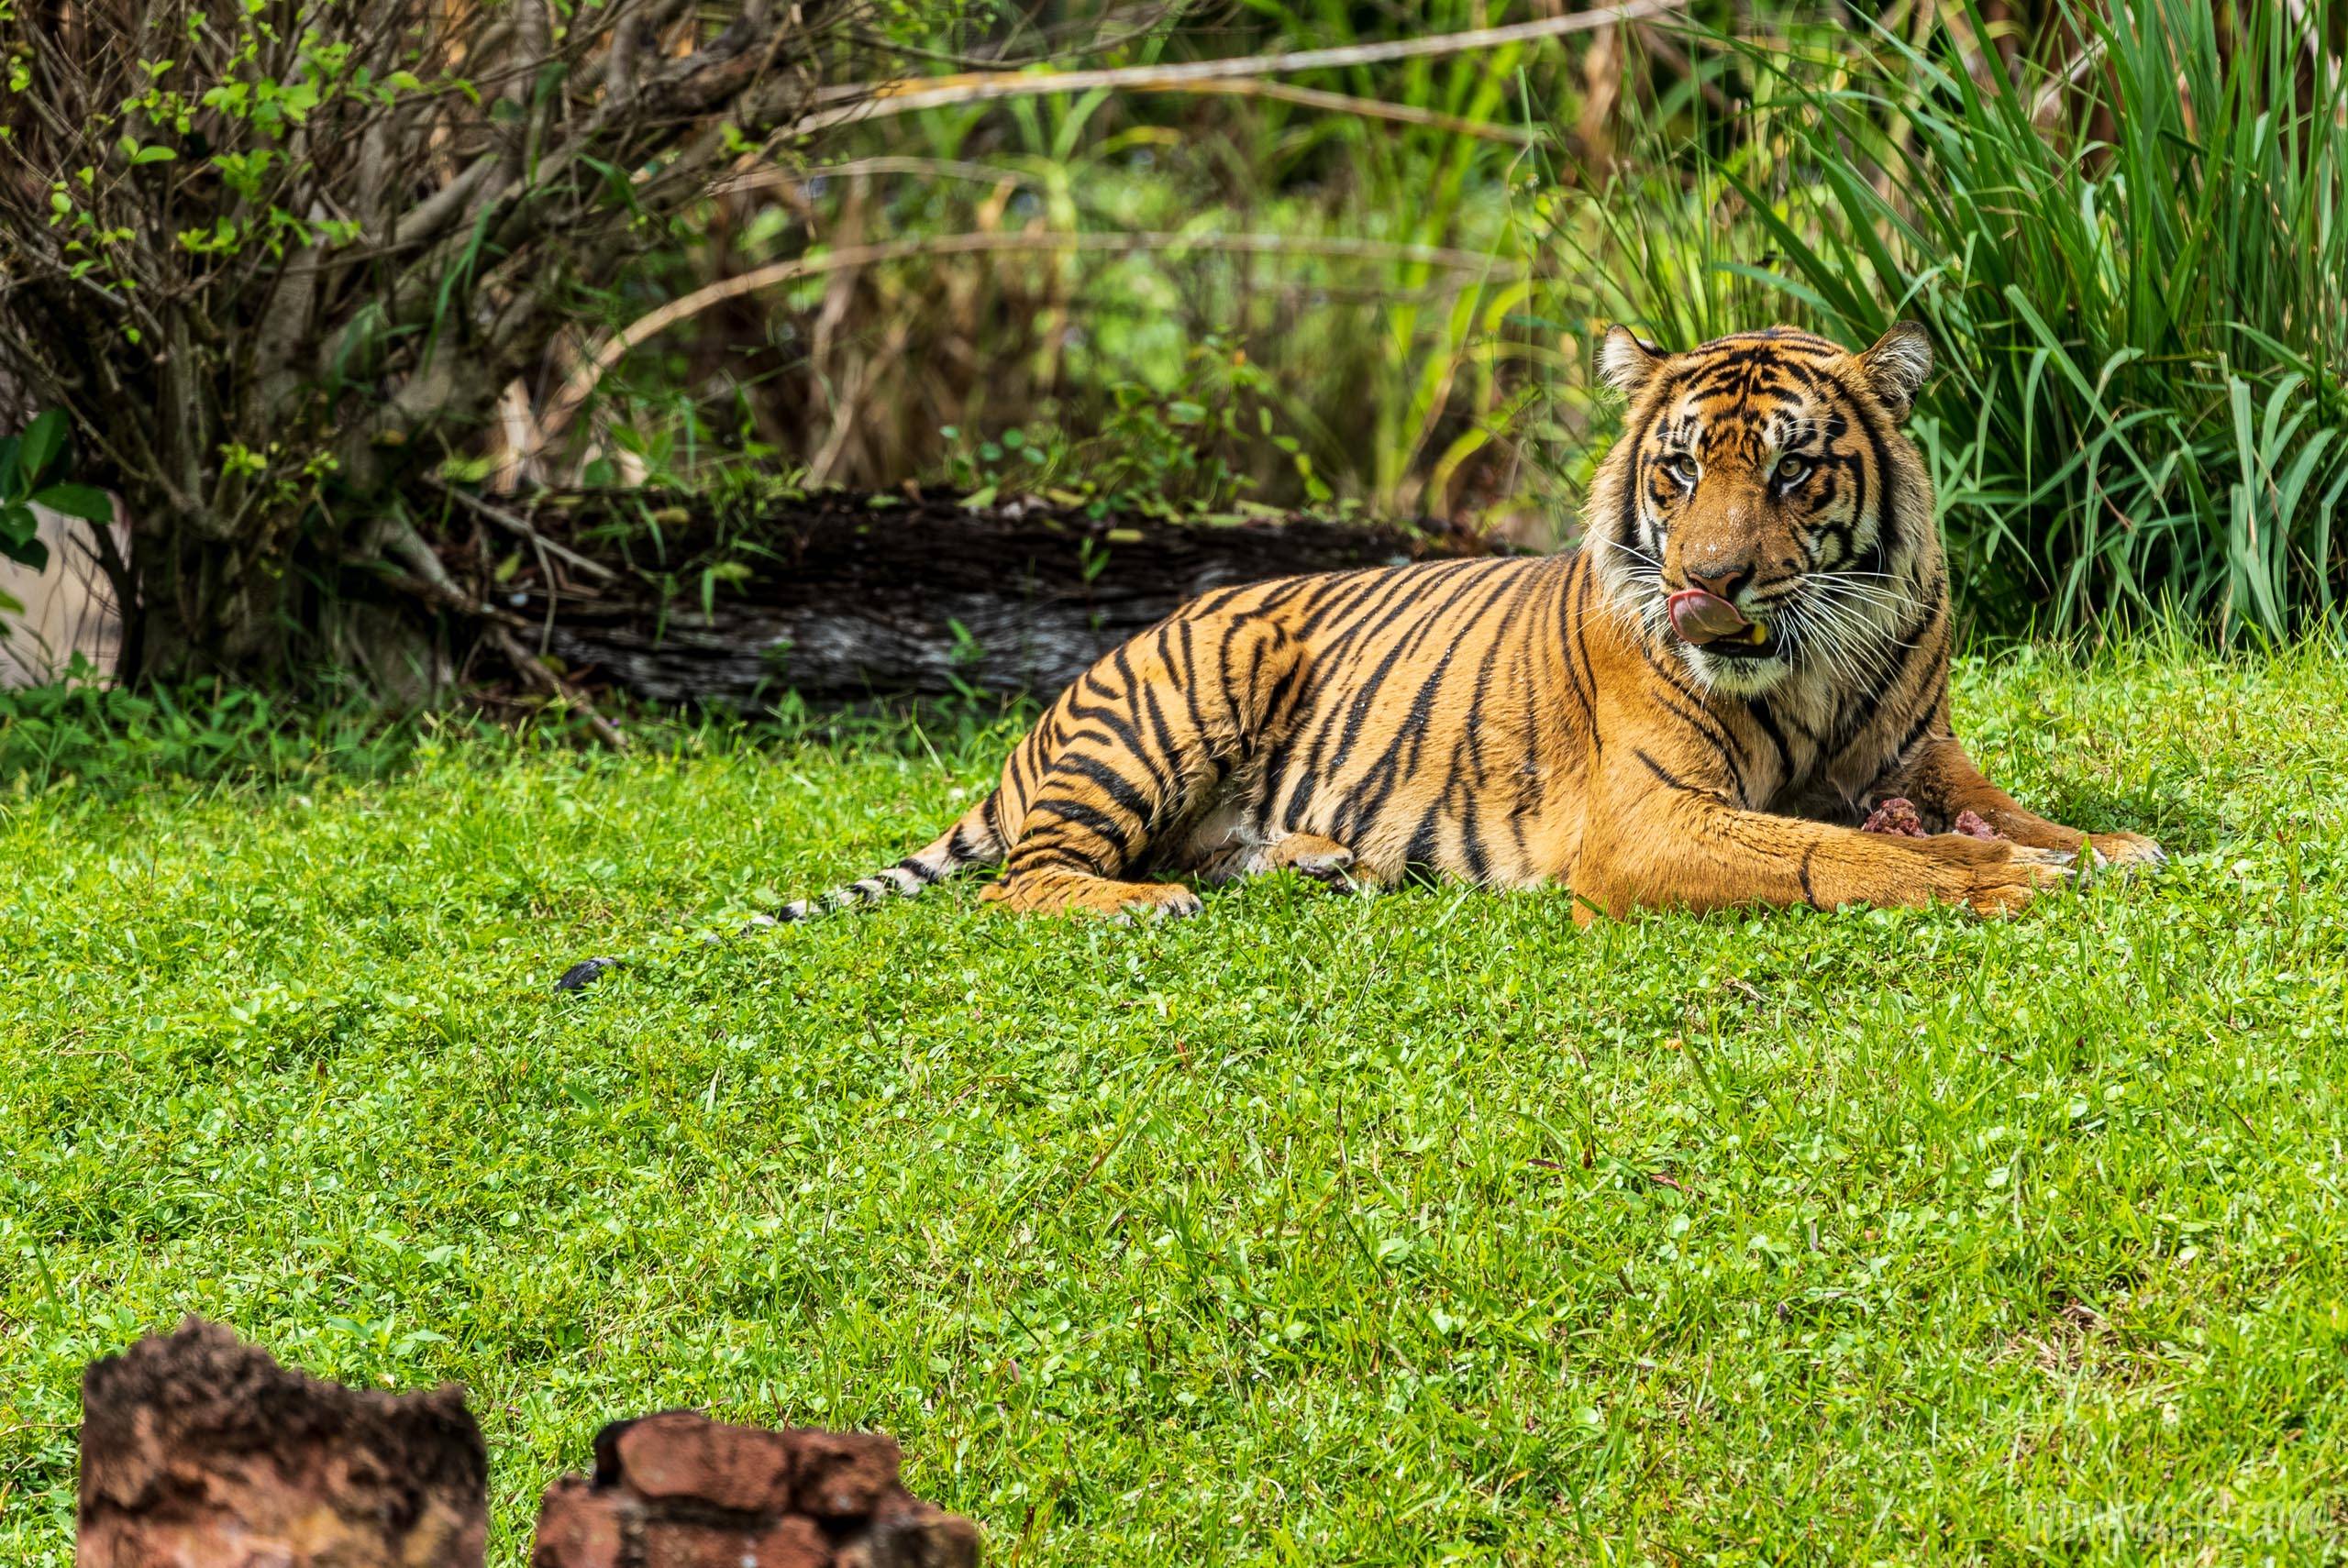 Maharajah Jungle Trek tiger exhibit closed for refurbishment